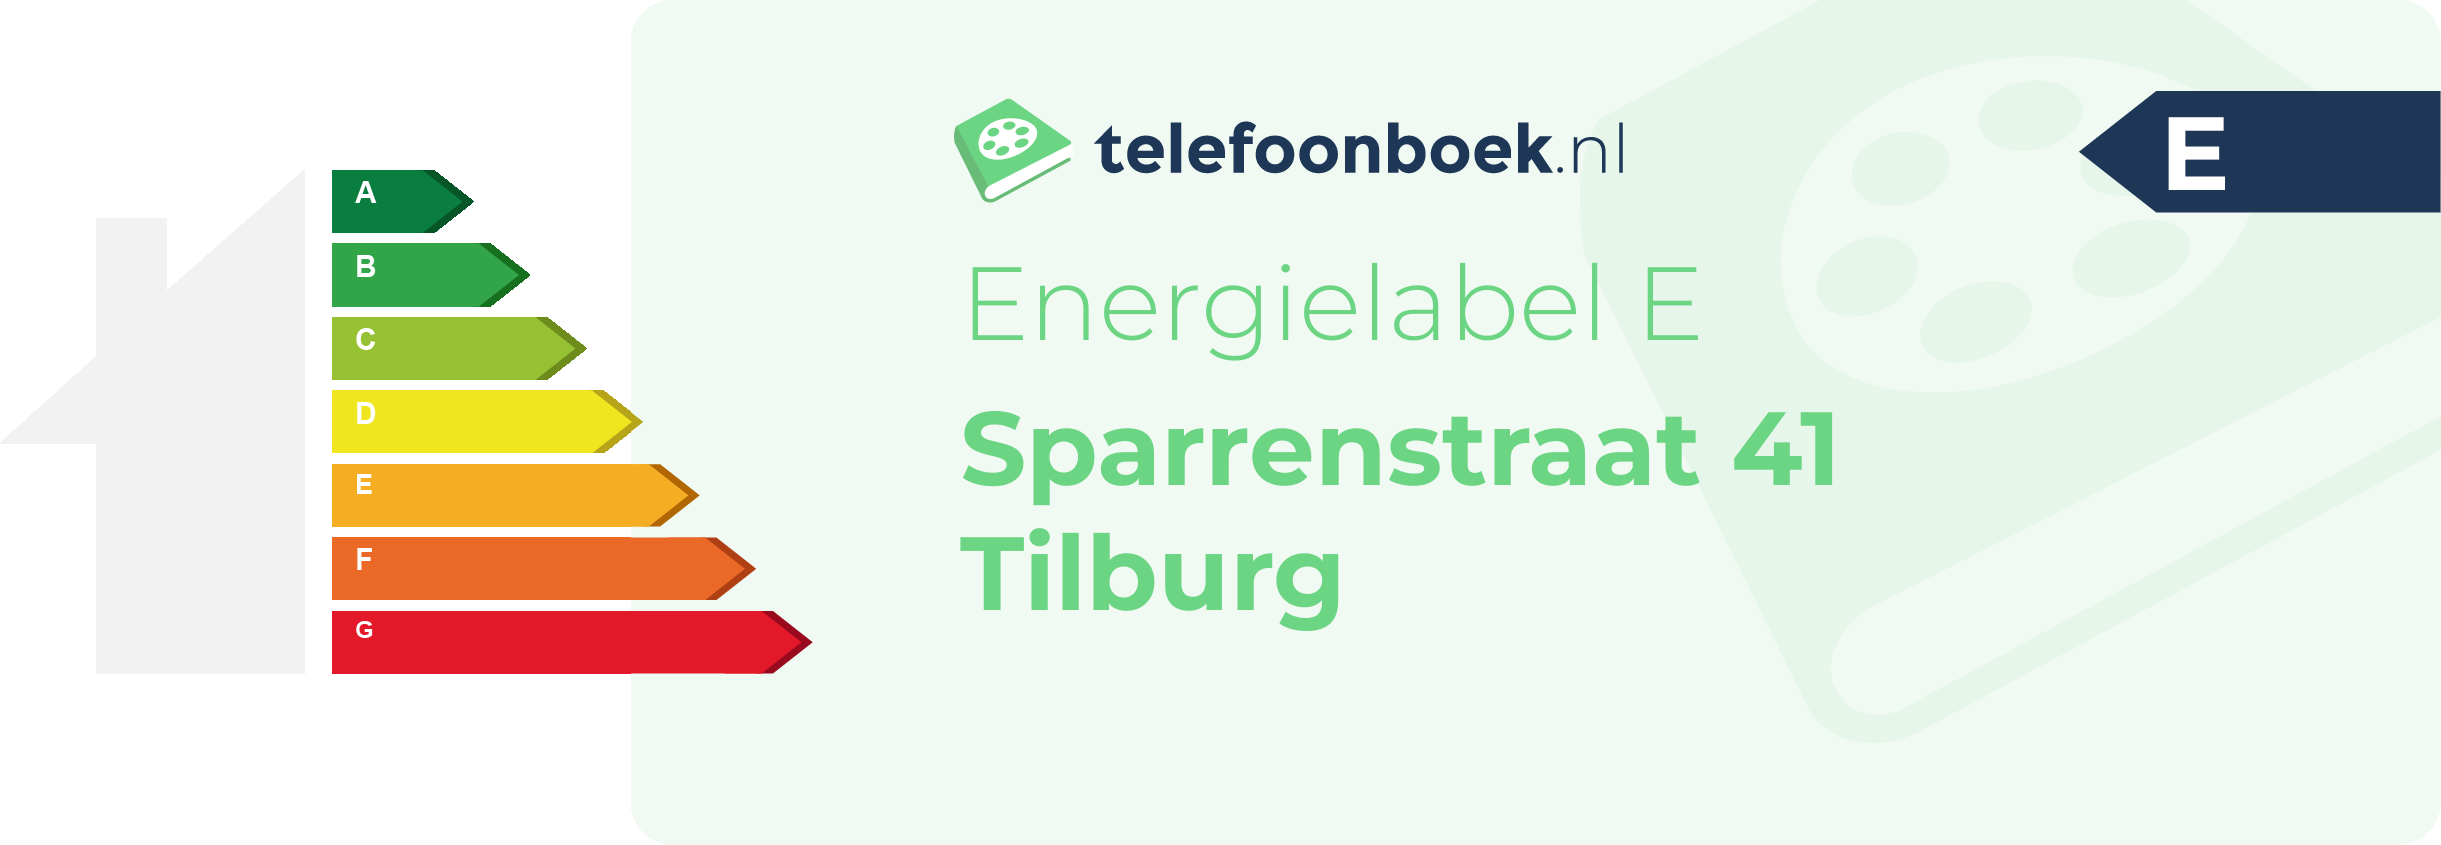 Energielabel Sparrenstraat 41 Tilburg